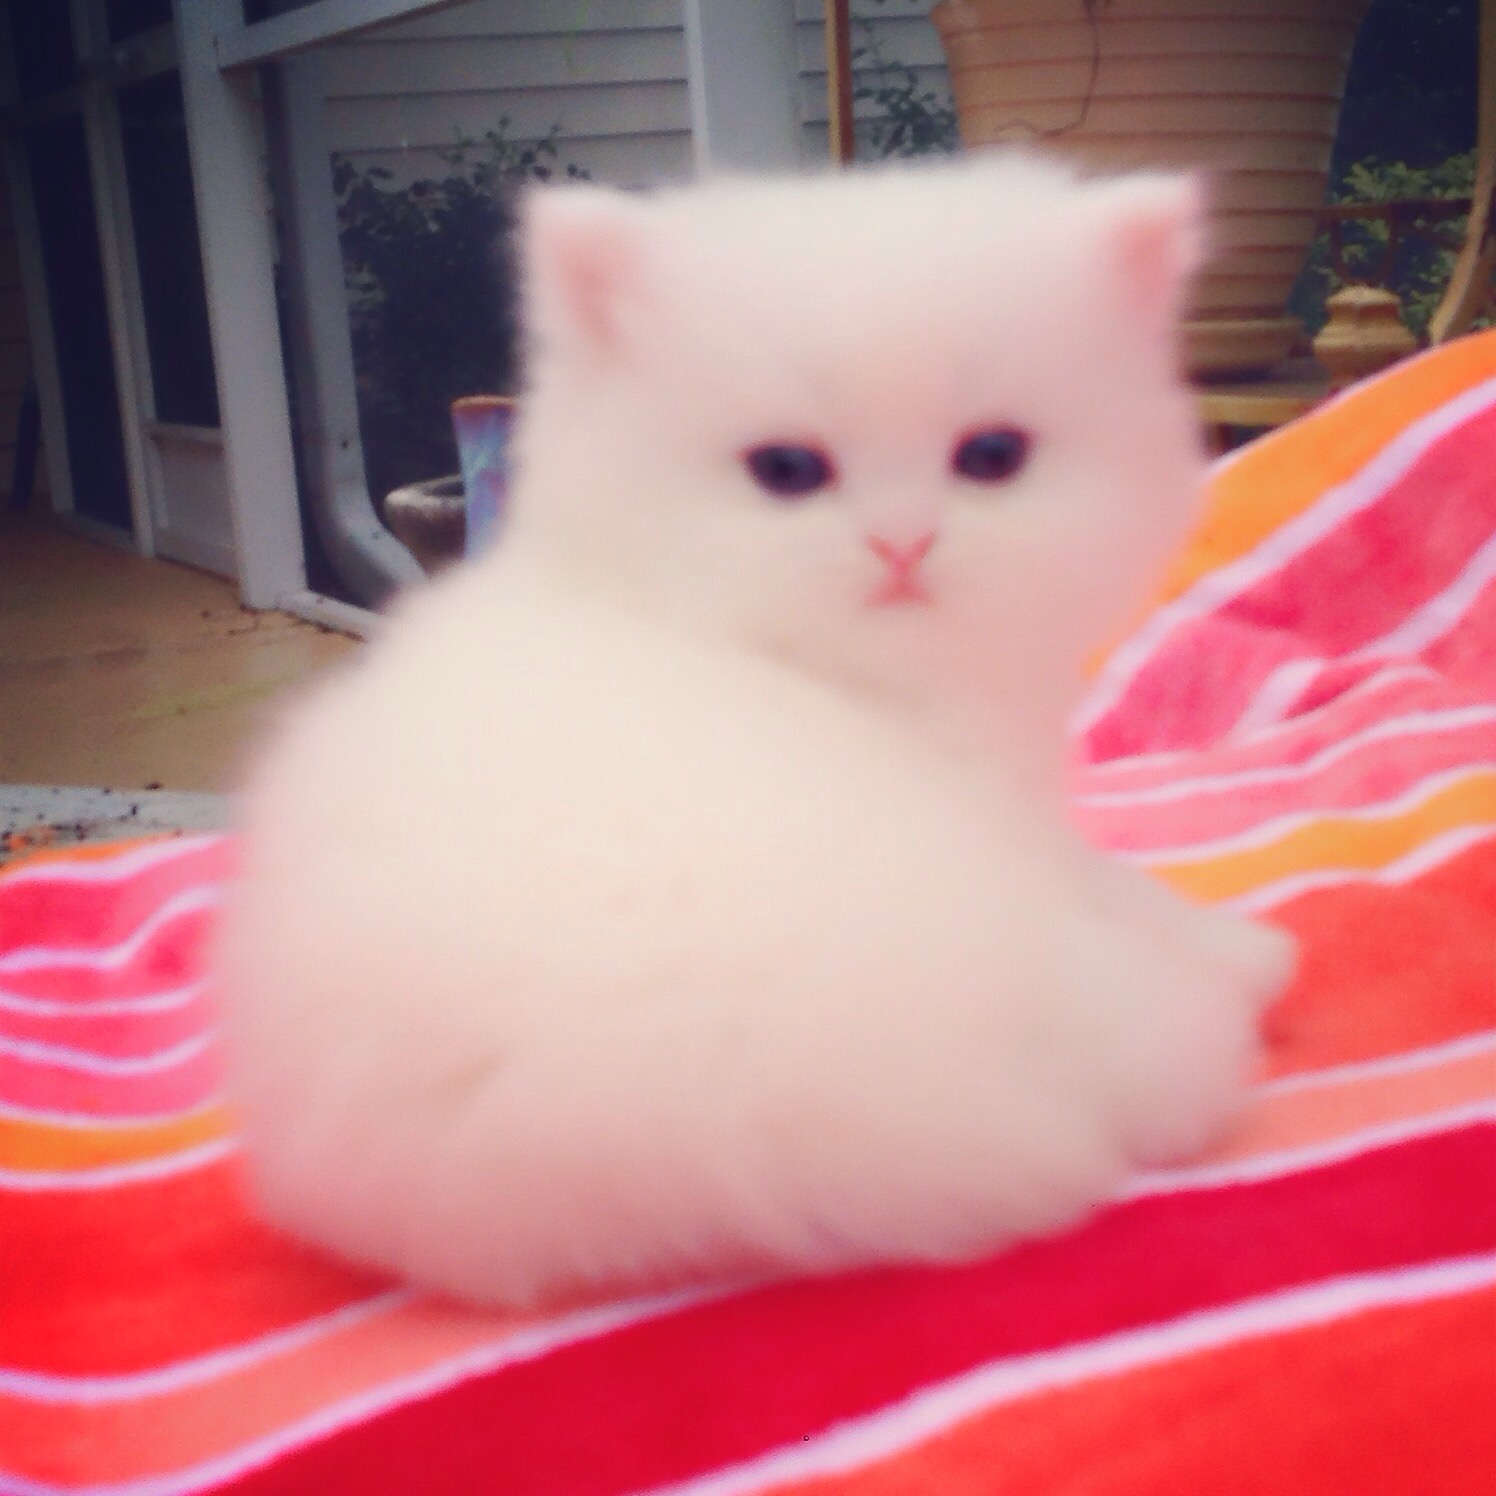 Persian Kittens For Sale | Teacup Kittens